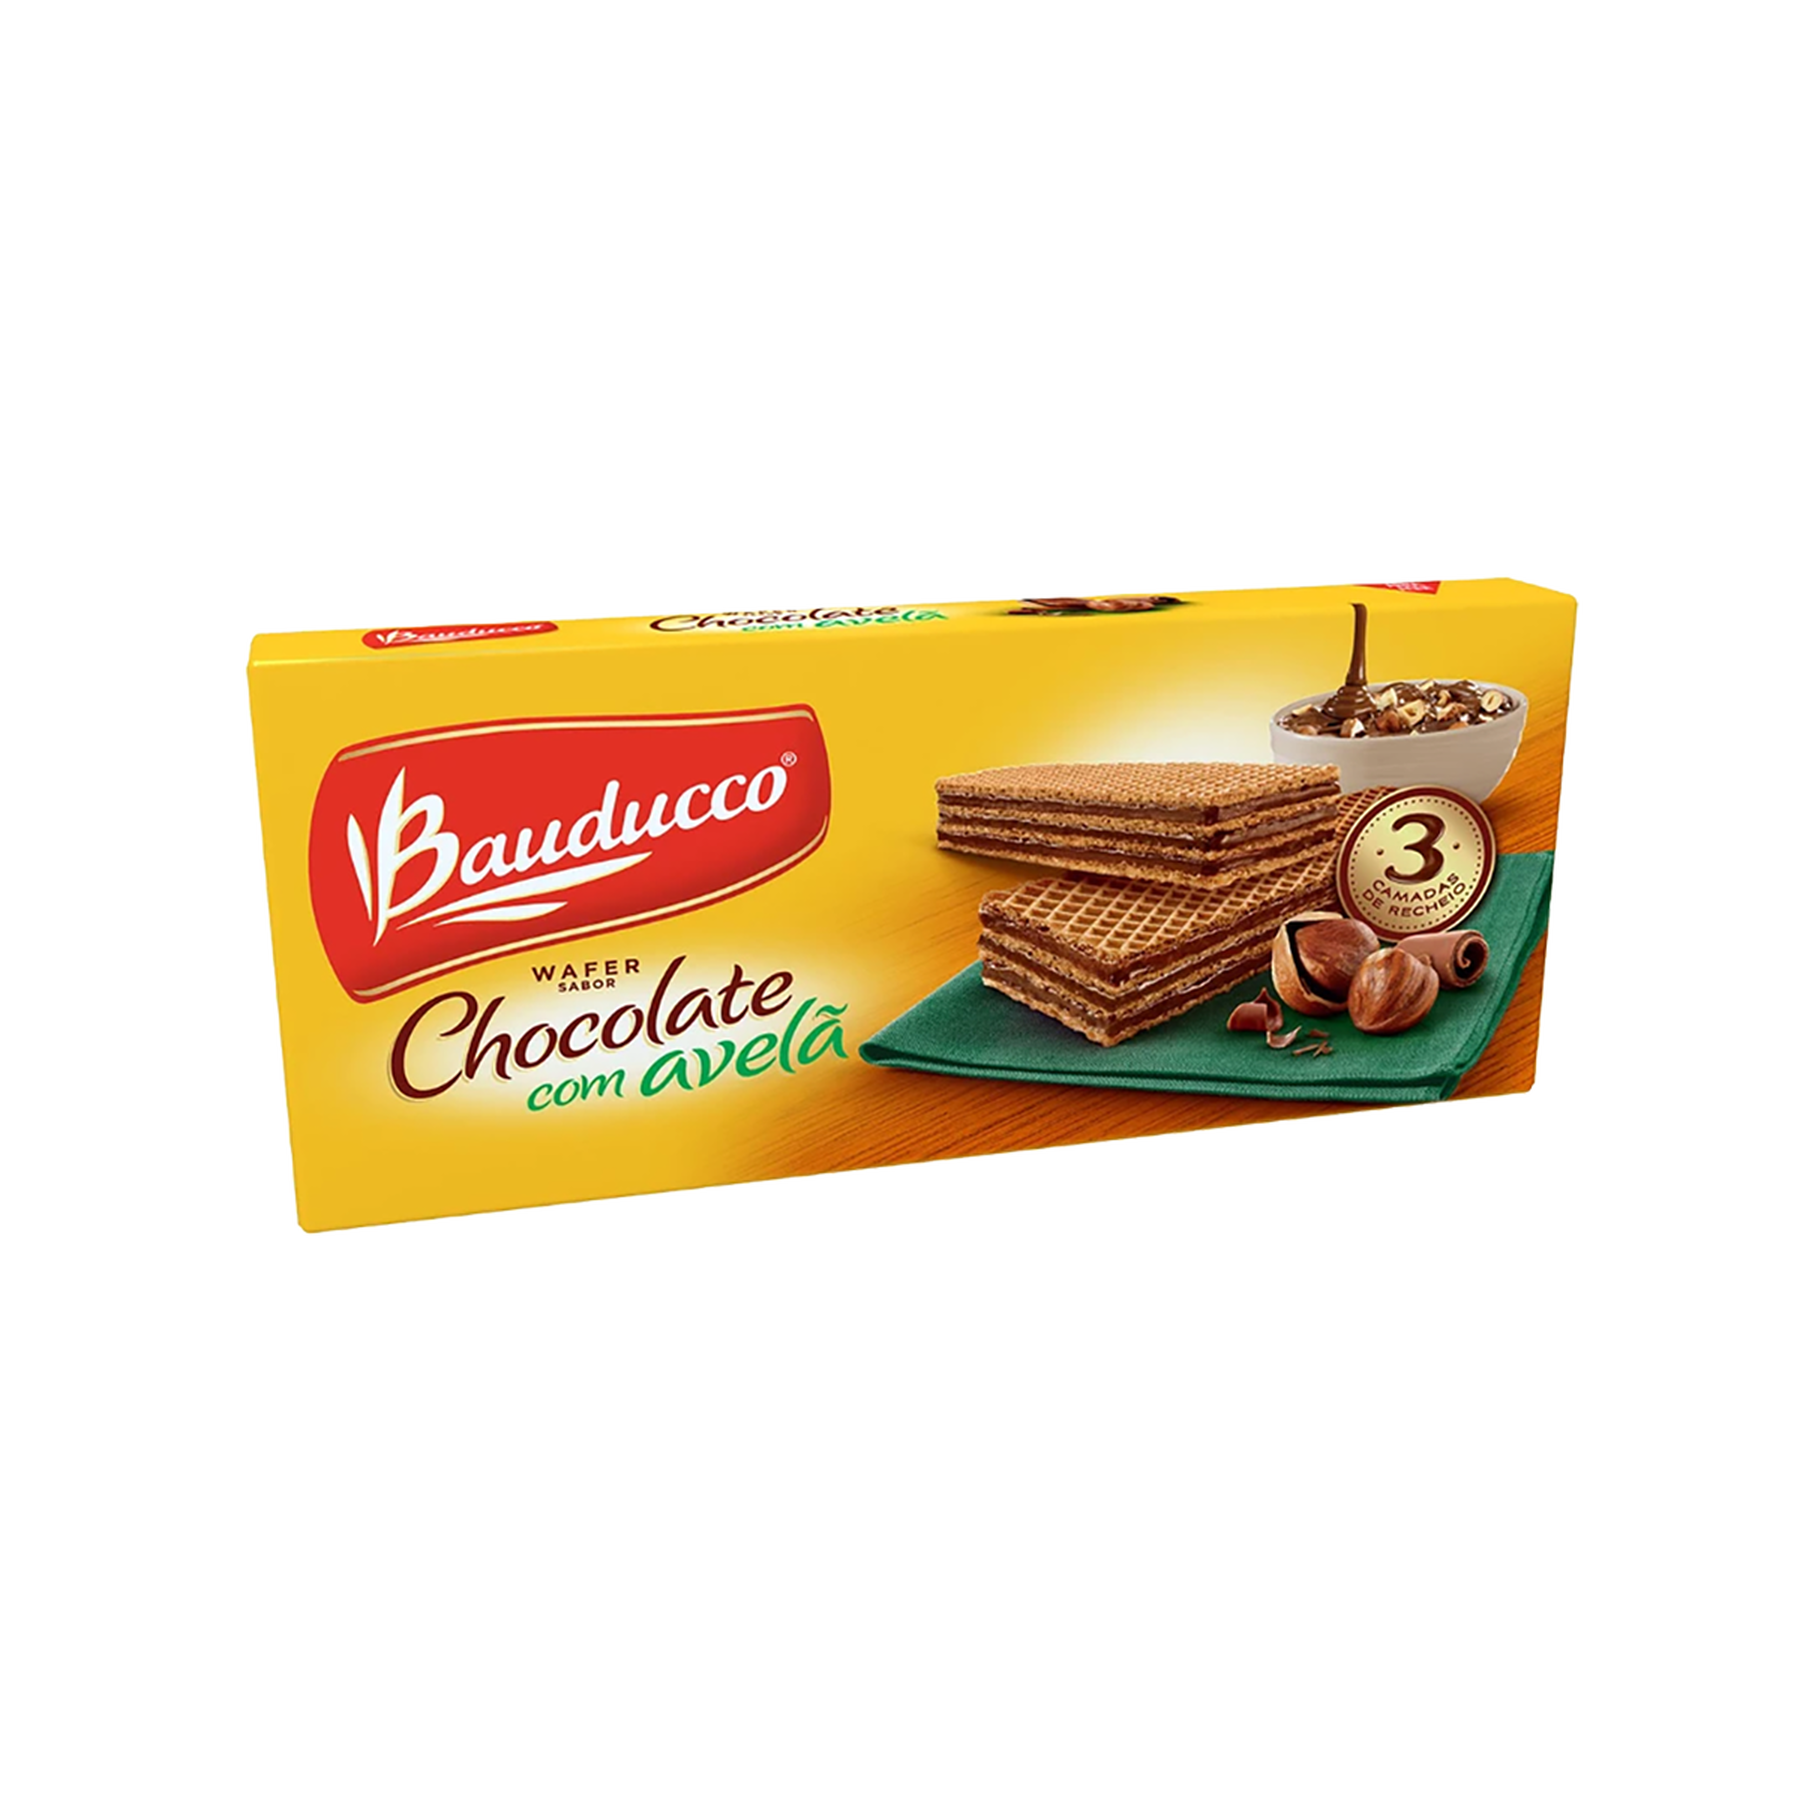 Biscoito Bauducco Wafer Chocolate Avelã 140g